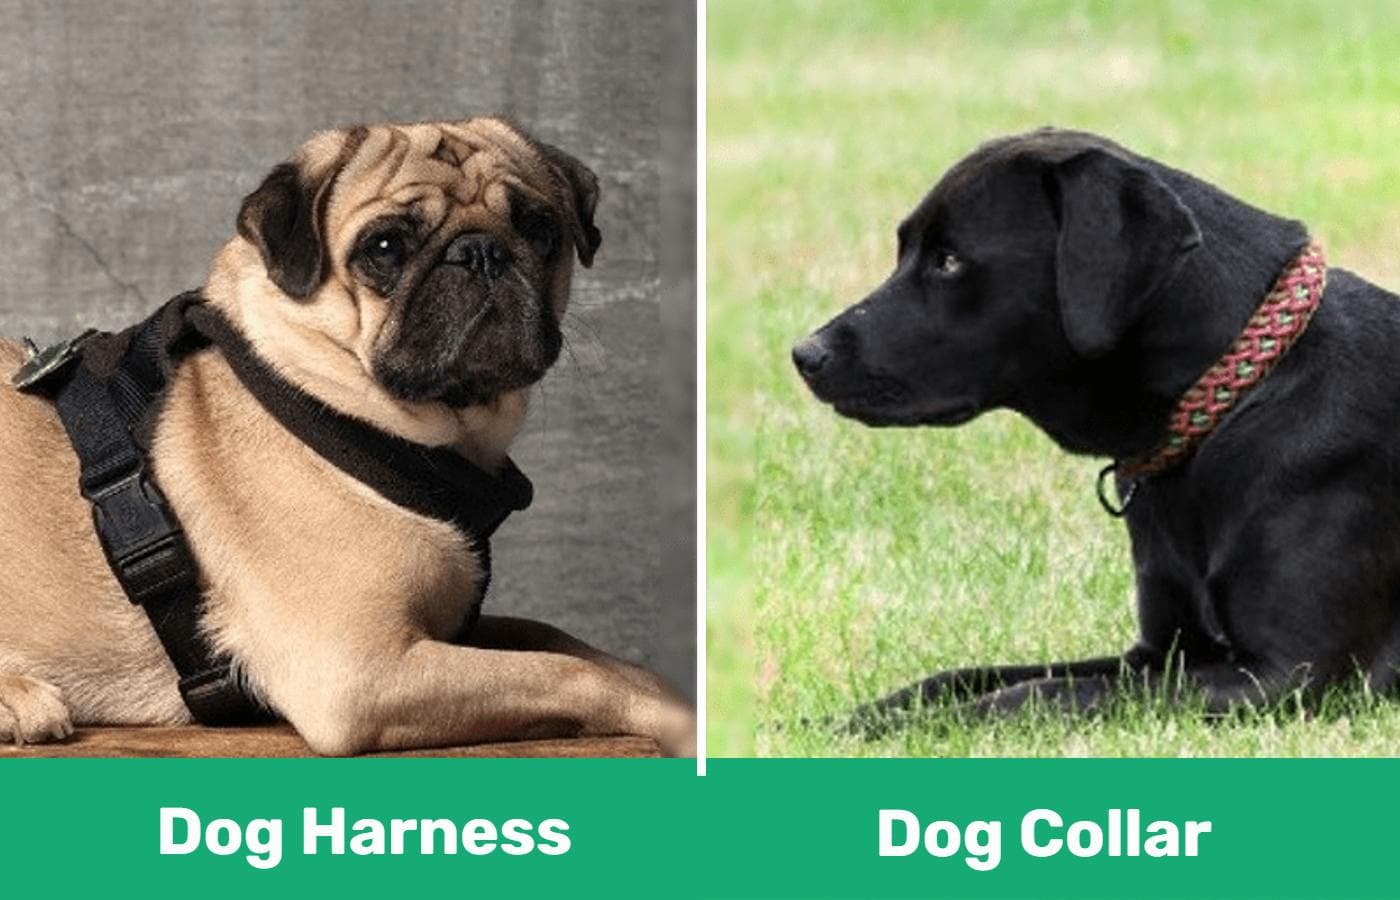 Dog harness vs dog collar - side by side